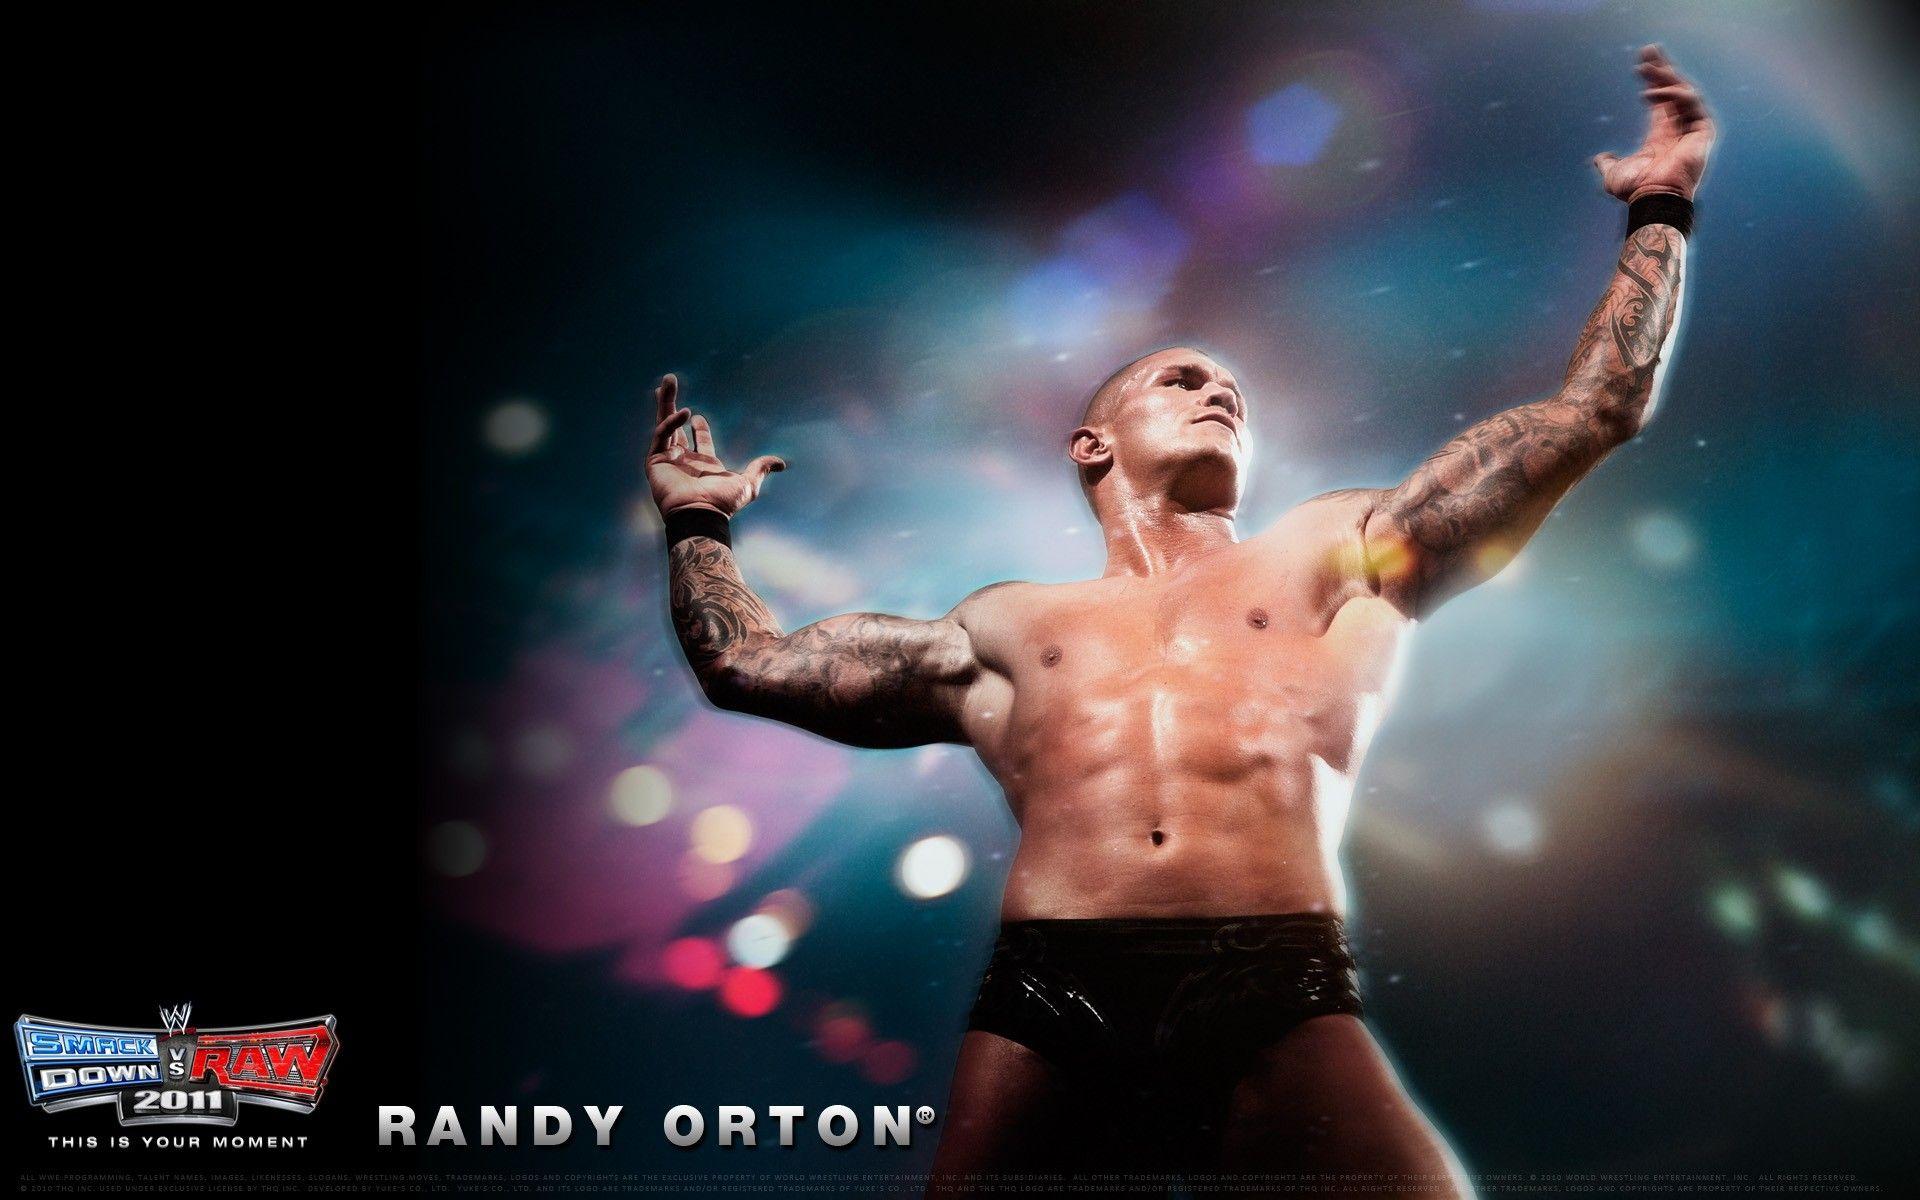 Download the Randy Orton Wallpaper, Randy Orton iPhone Wallpaper